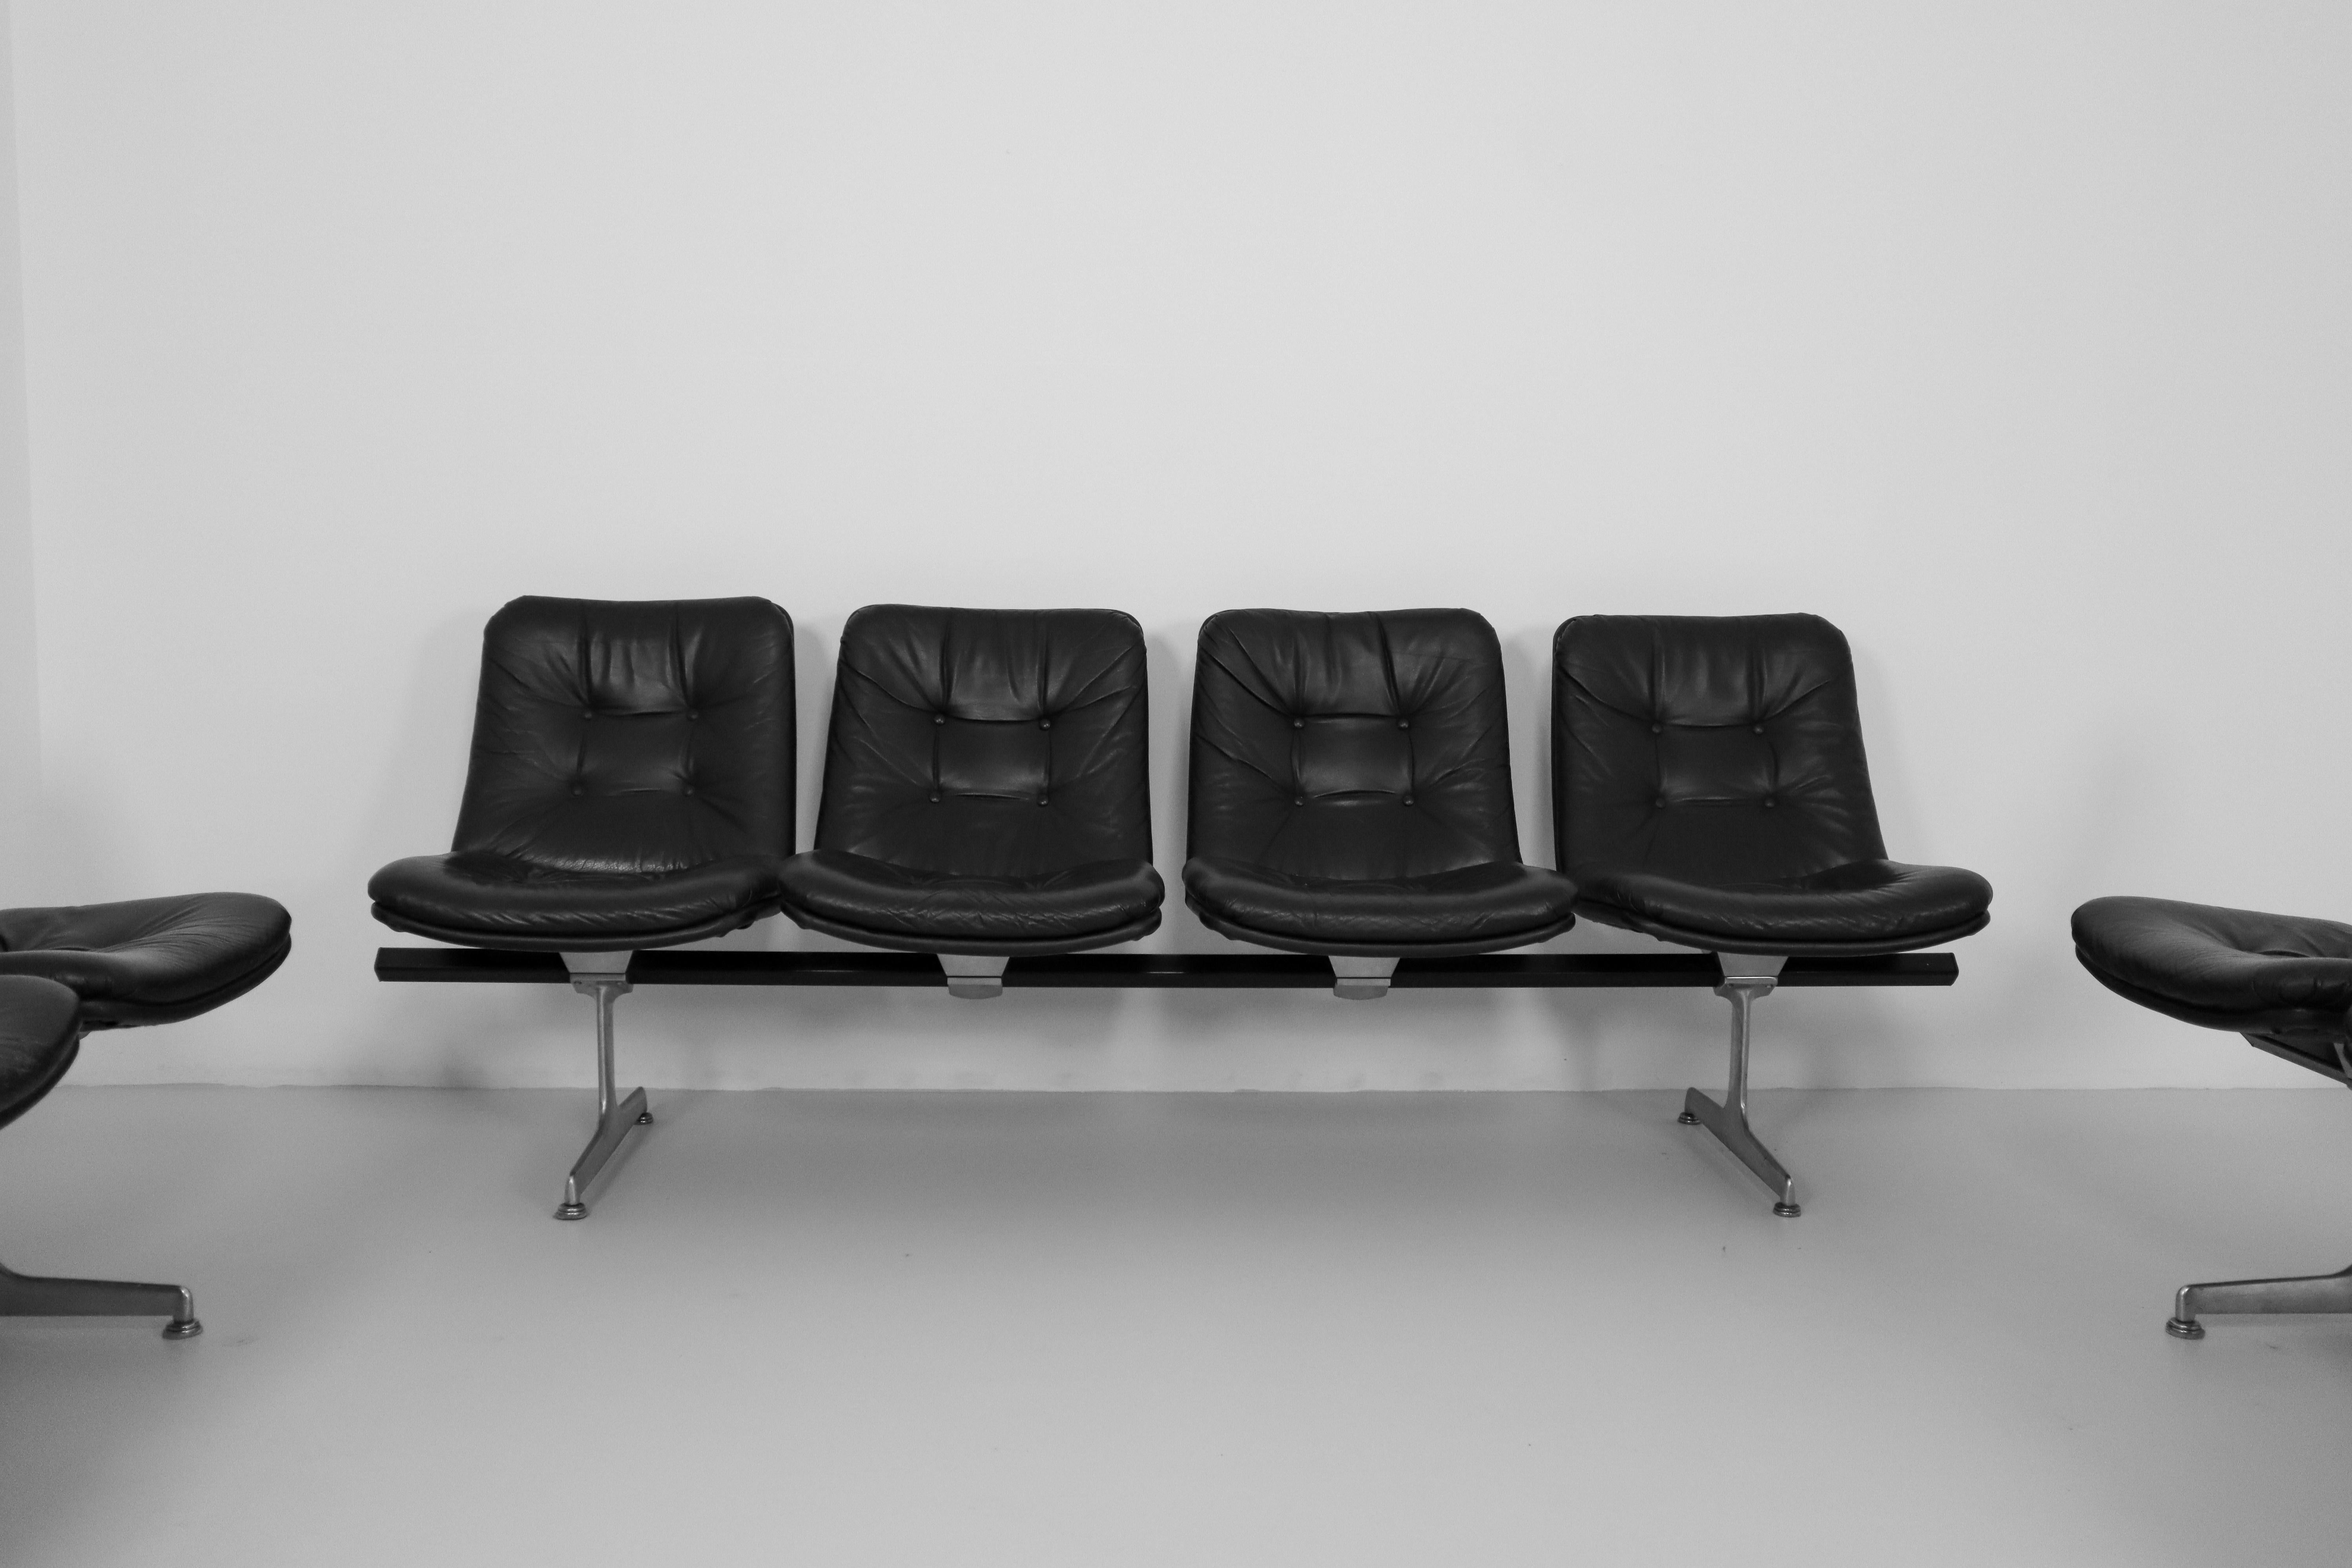 Geoffrey Harcourt Waiting Room Multiple Seating System für Artifort, 1960er Jahre (Leder)